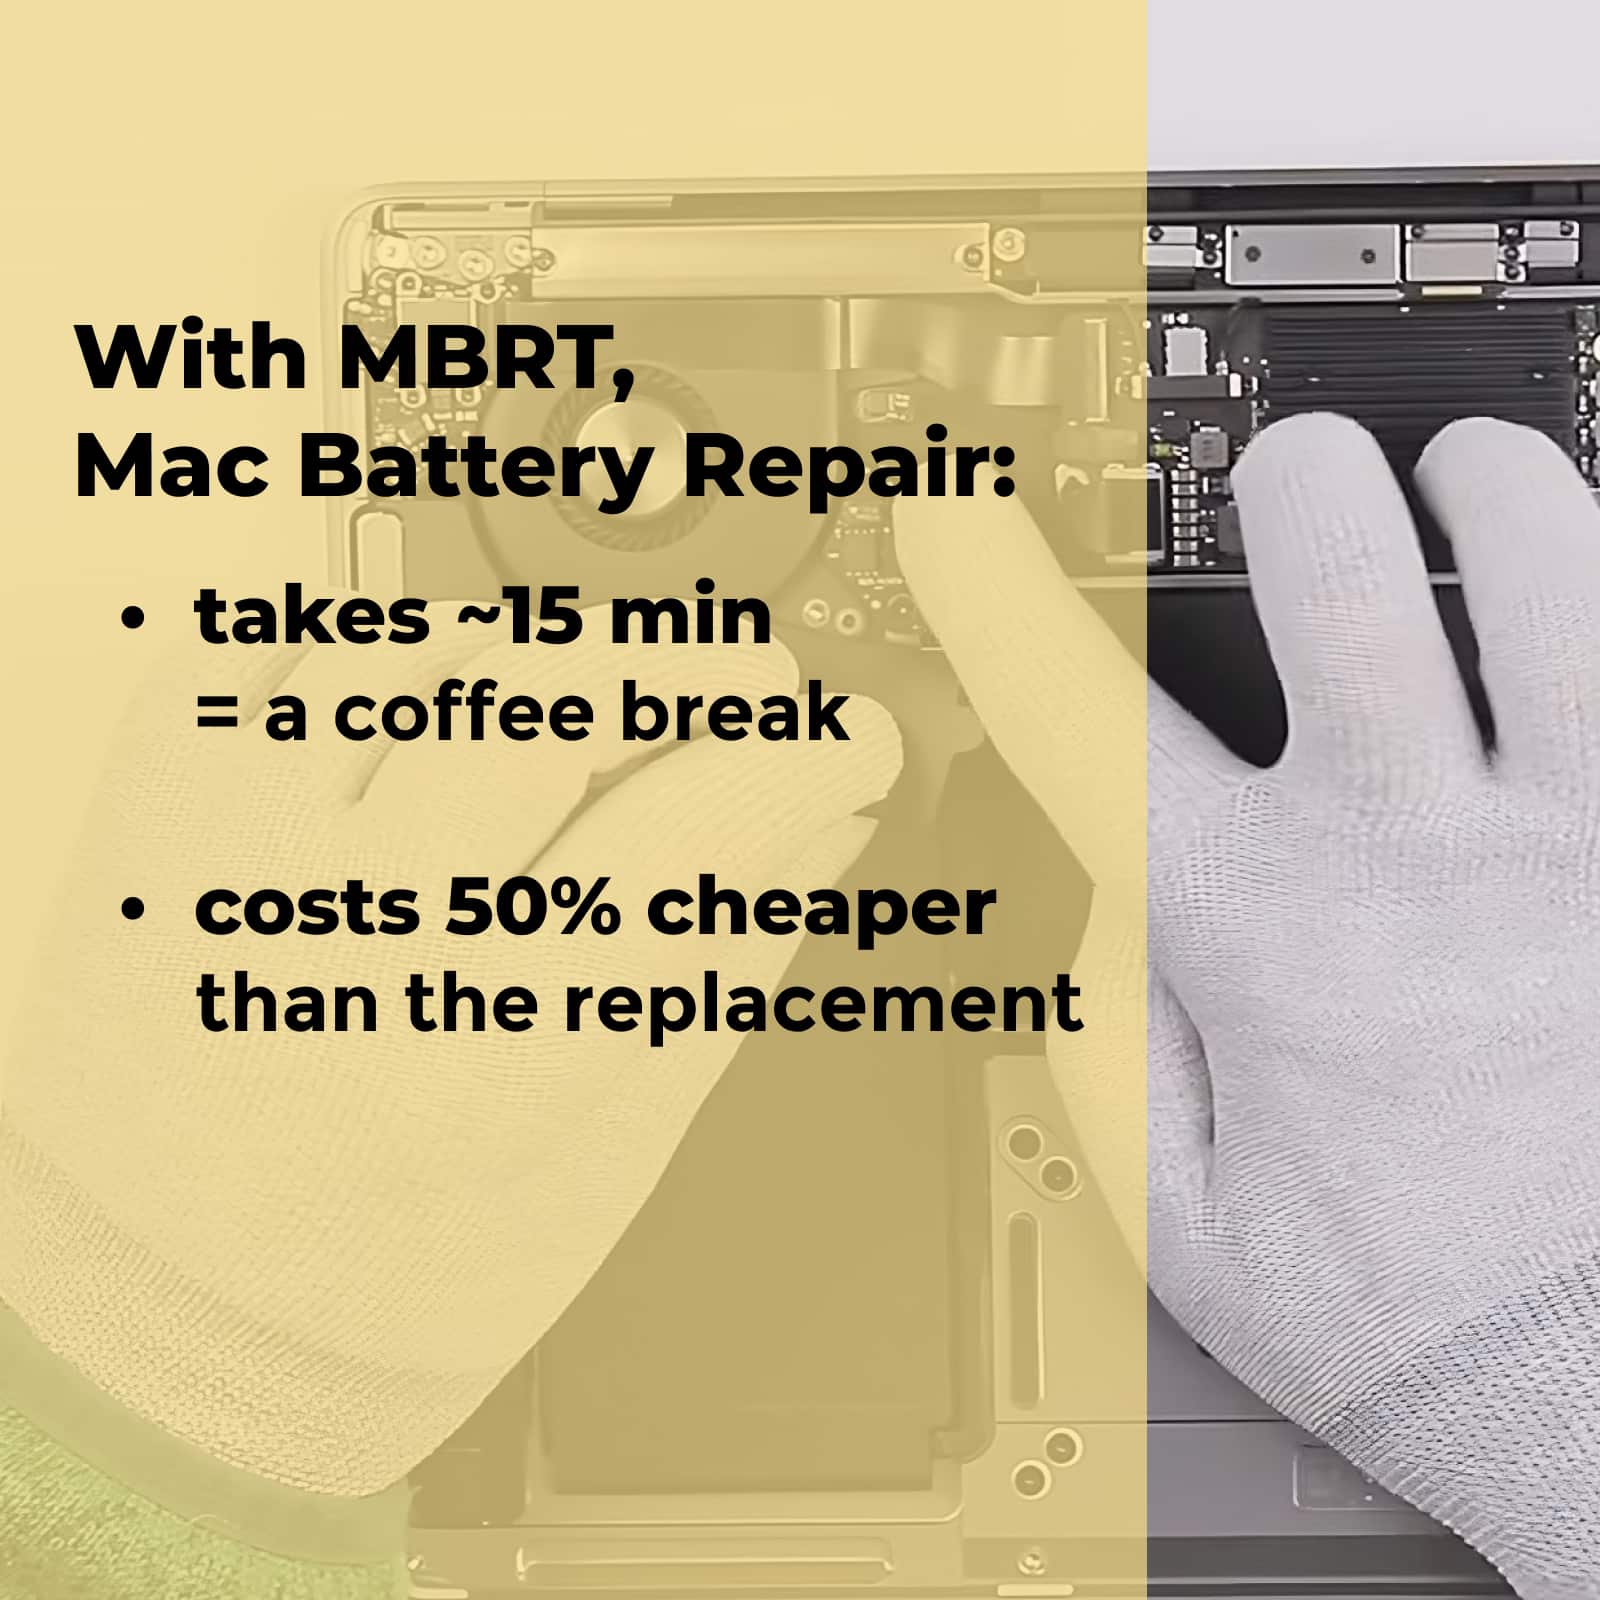 MBRT Pro - Mac Battery Repair in 15 minutes